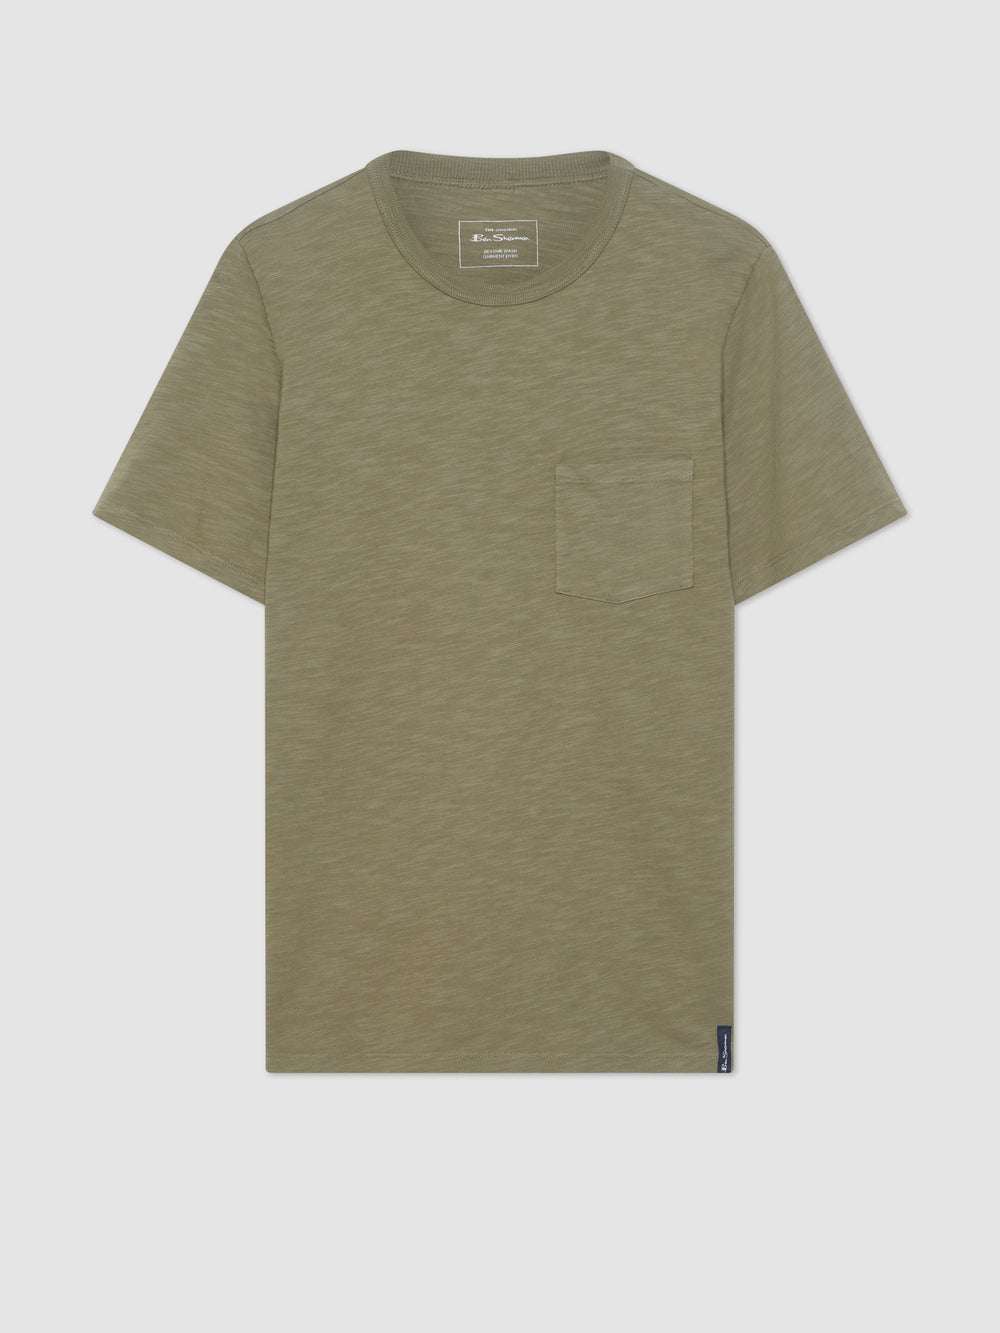 Garment Dye Beatnik Short-Sleeve T-Shirt - Olive Green